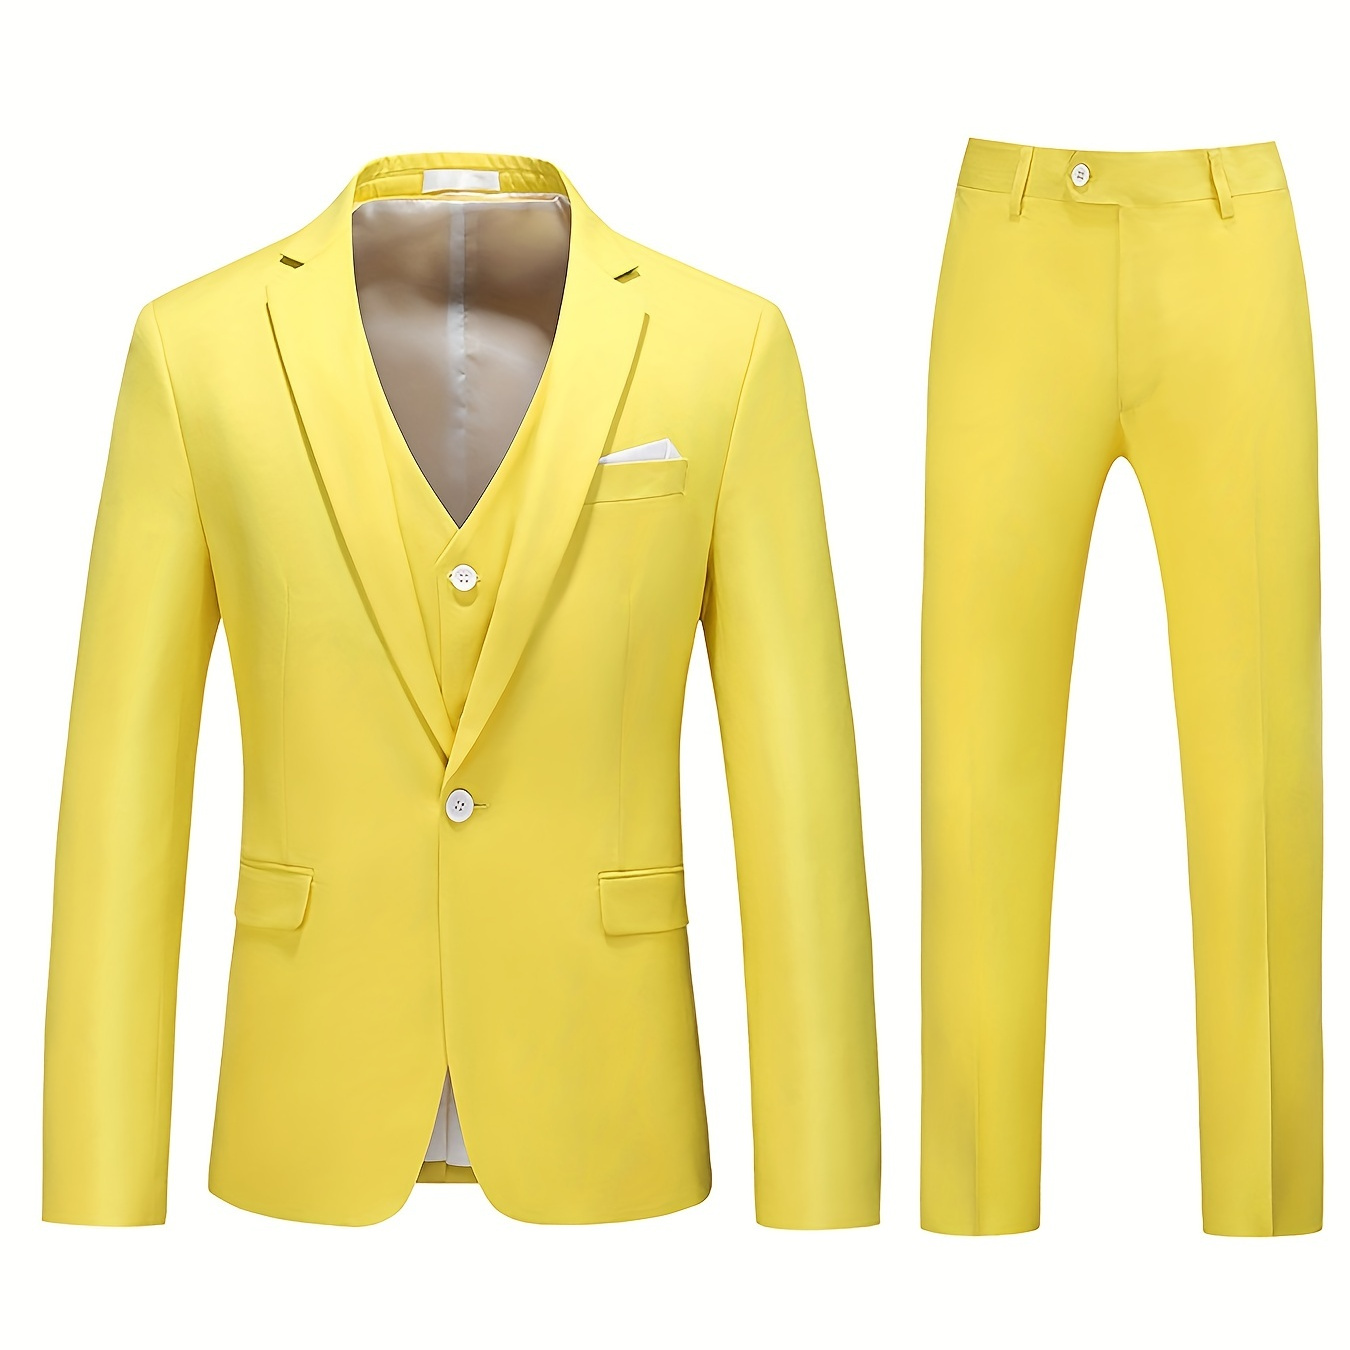 

Formal 3 Pieces Set, Men's 1 Button Suit Jacket & Single Breasted Vest & Pants Suit Set For Business Dinner Wedding Party